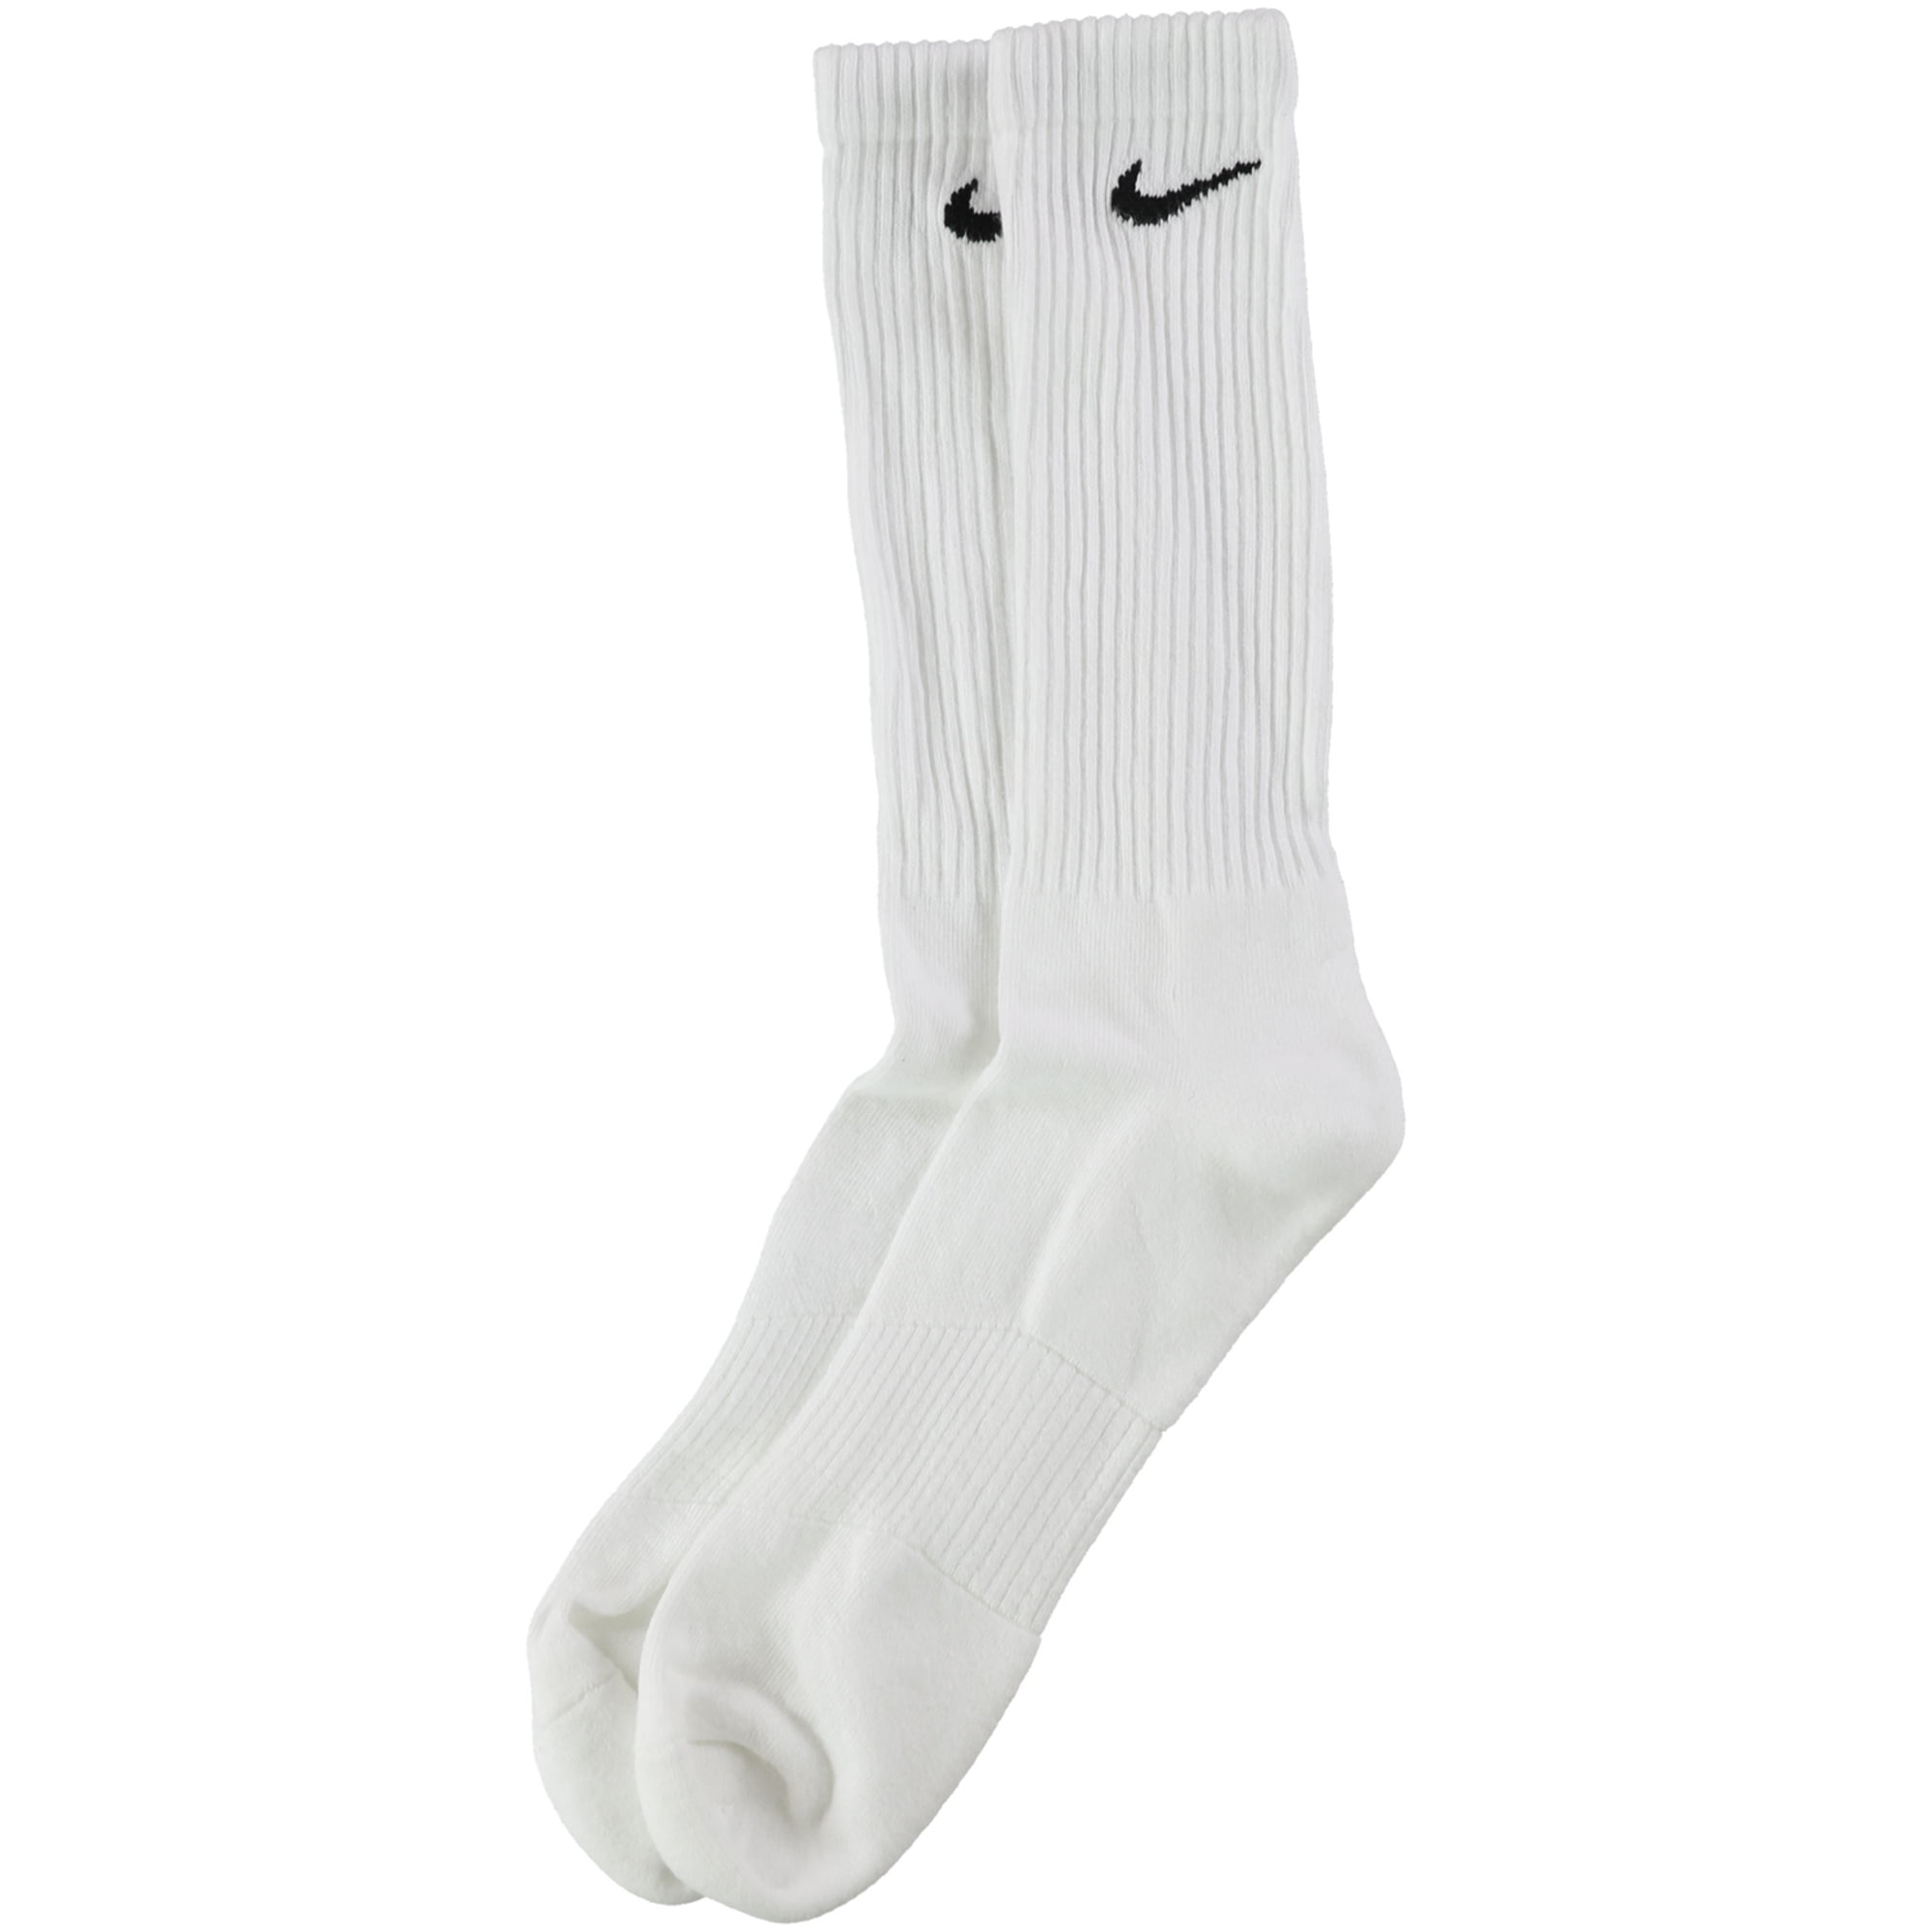 Nike - Nike Mens Performance Cushion Midweight Socks, White, X-Large ...